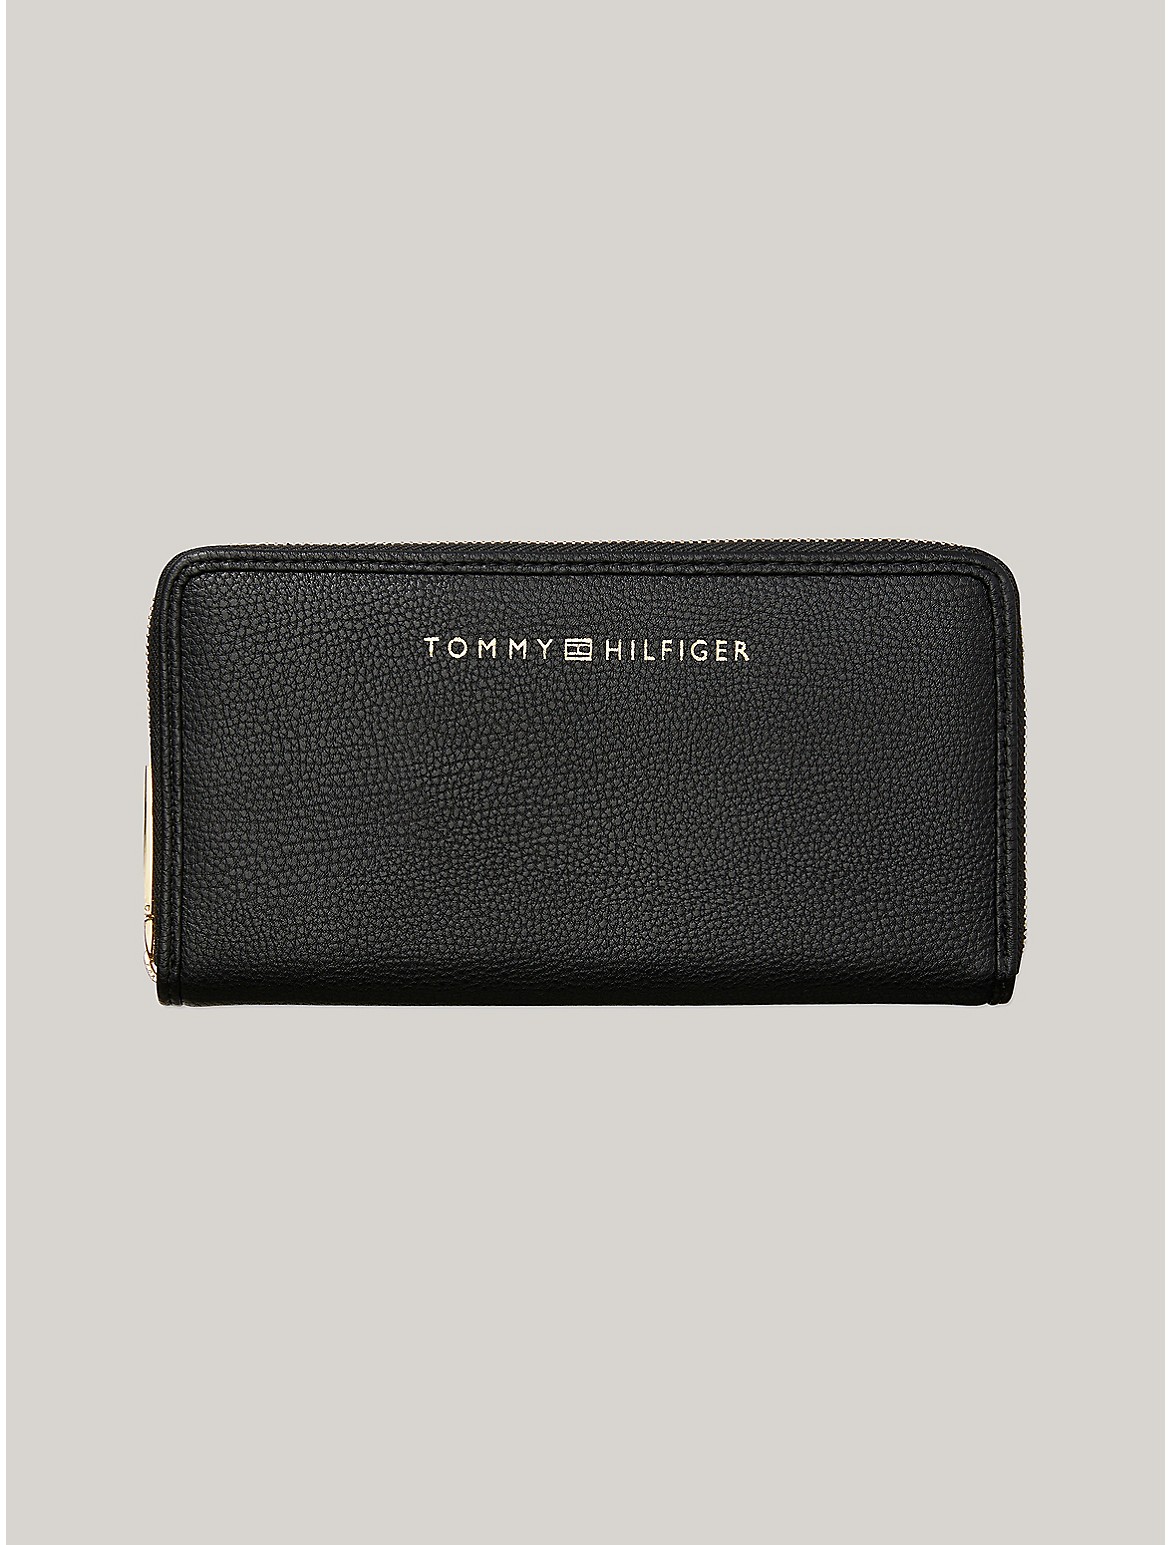 Tommy Hilfiger Large Zip Wallet In Black